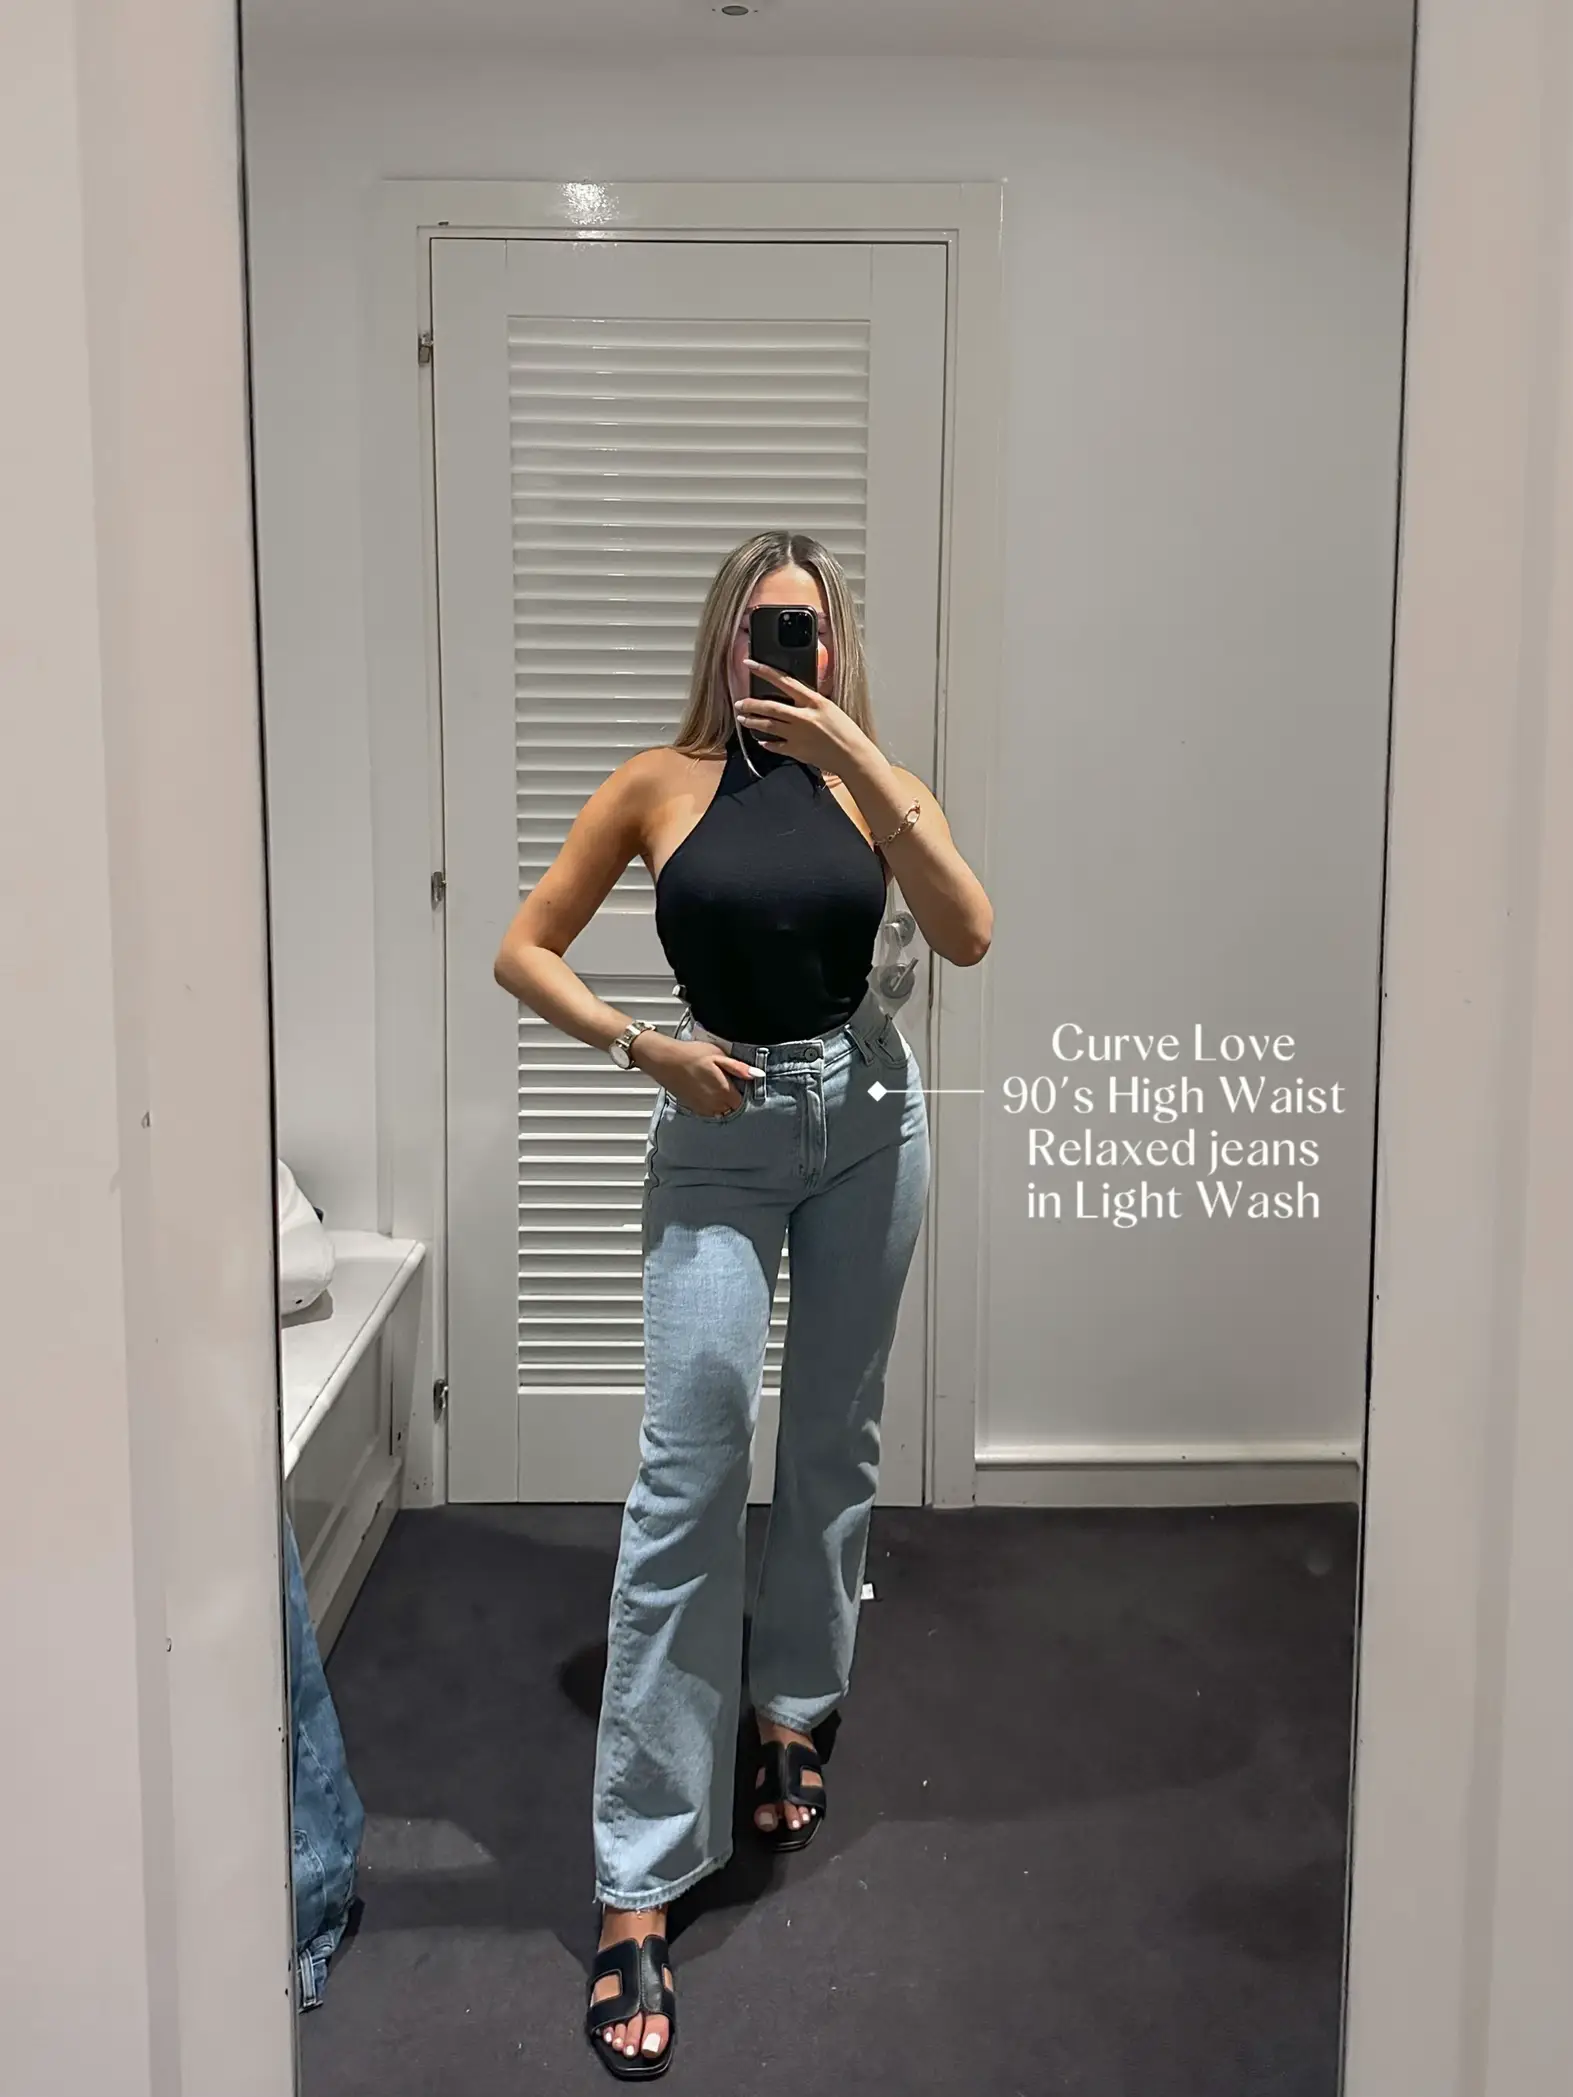 Lucky Brand Brooke Legging Style jeans. Size 0/25 - Depop